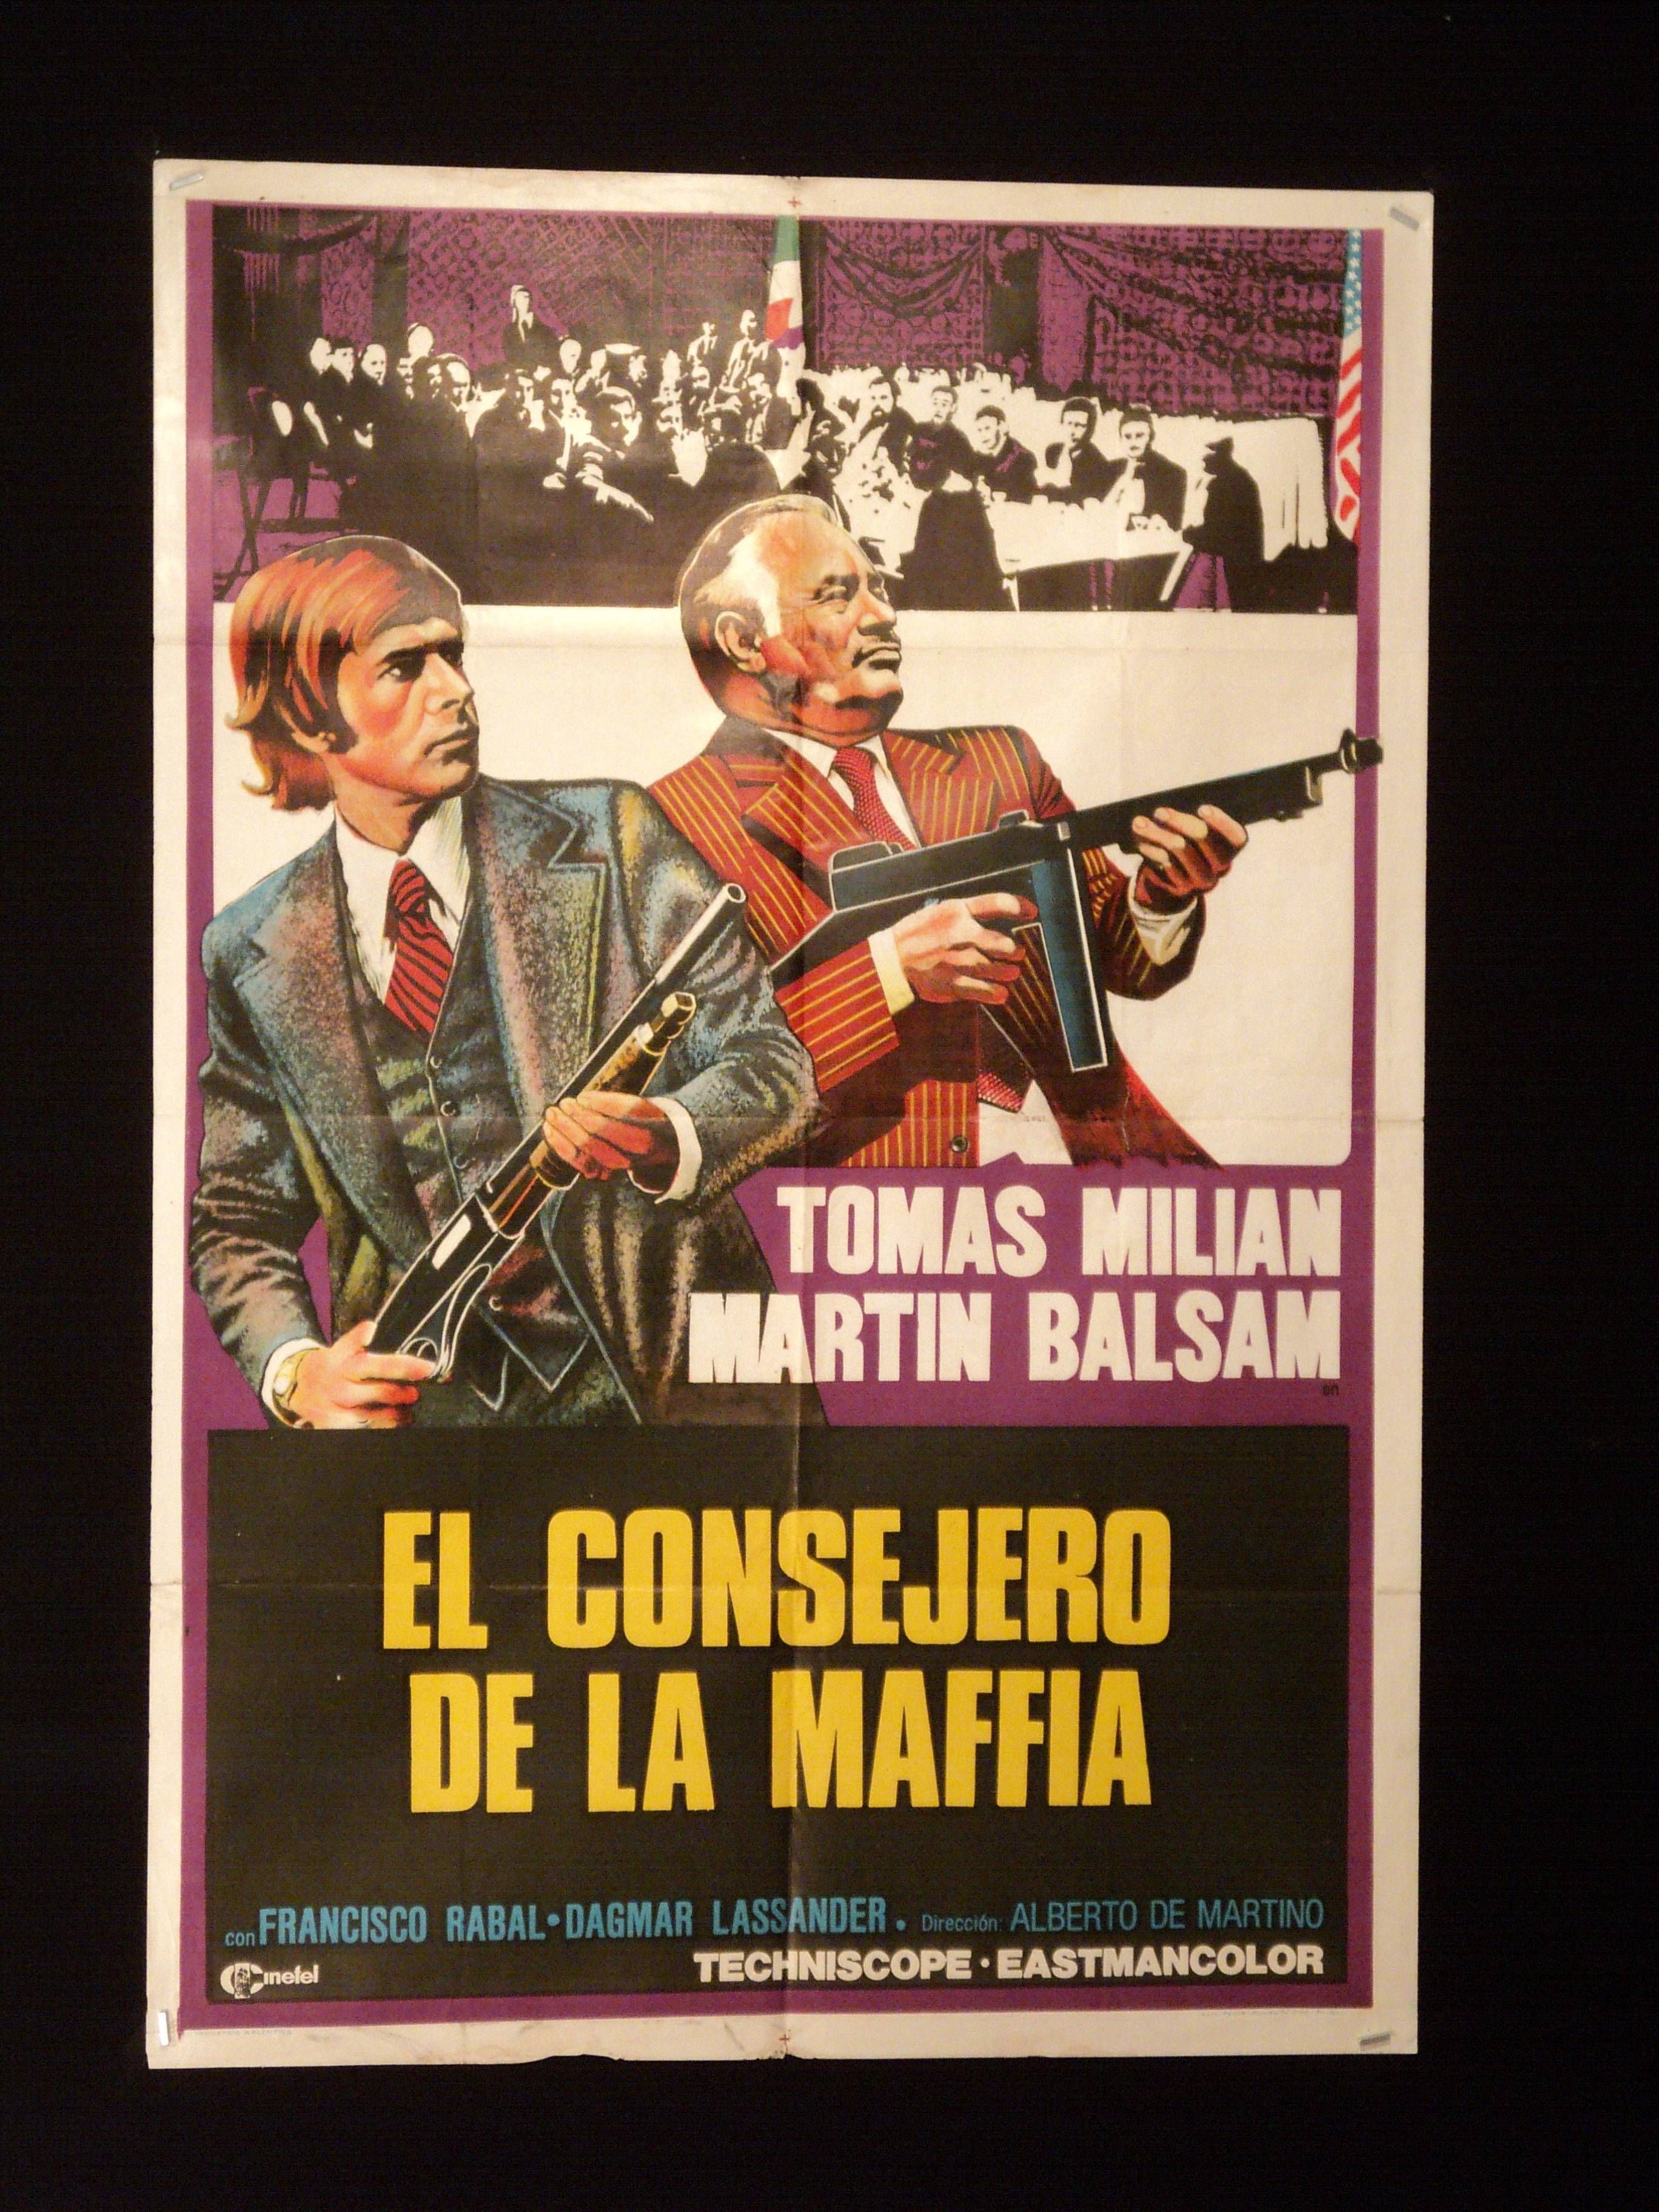 Maffia), starring Martin Balsam, Tomas Milian and